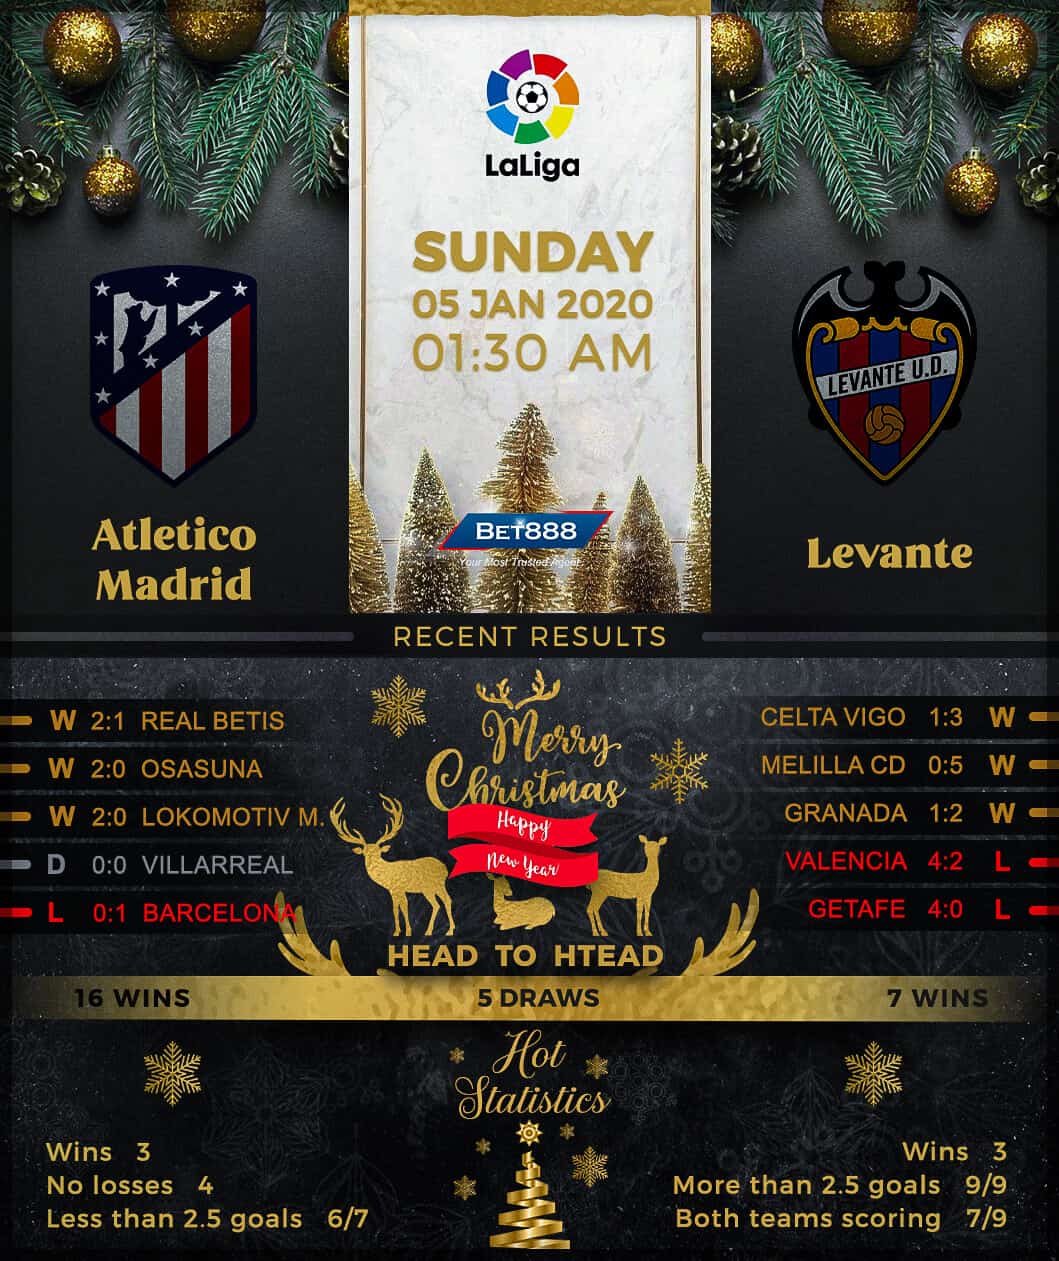 Atletico Madrid vs Levante 05/01/20